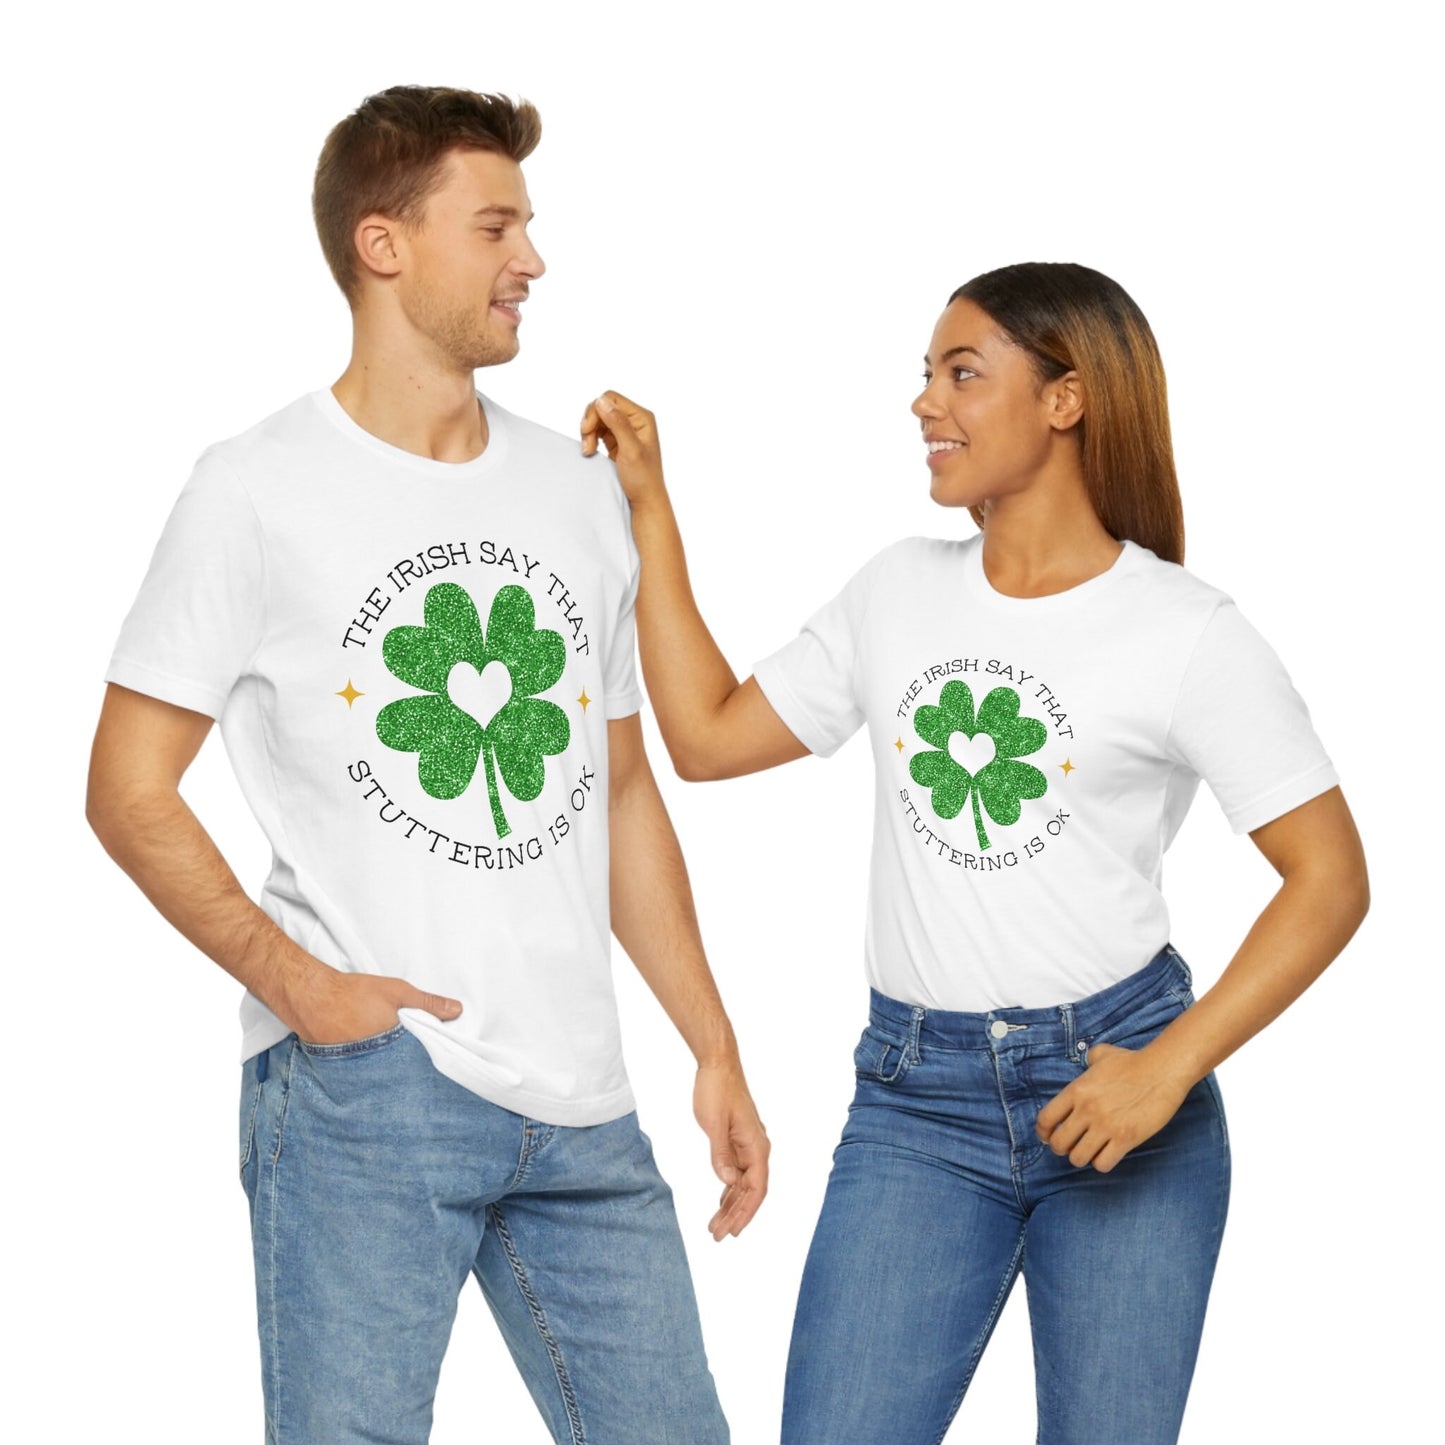 St. Patrick's Day Irish Say that Stuttering is OK Unisex T-Shirt